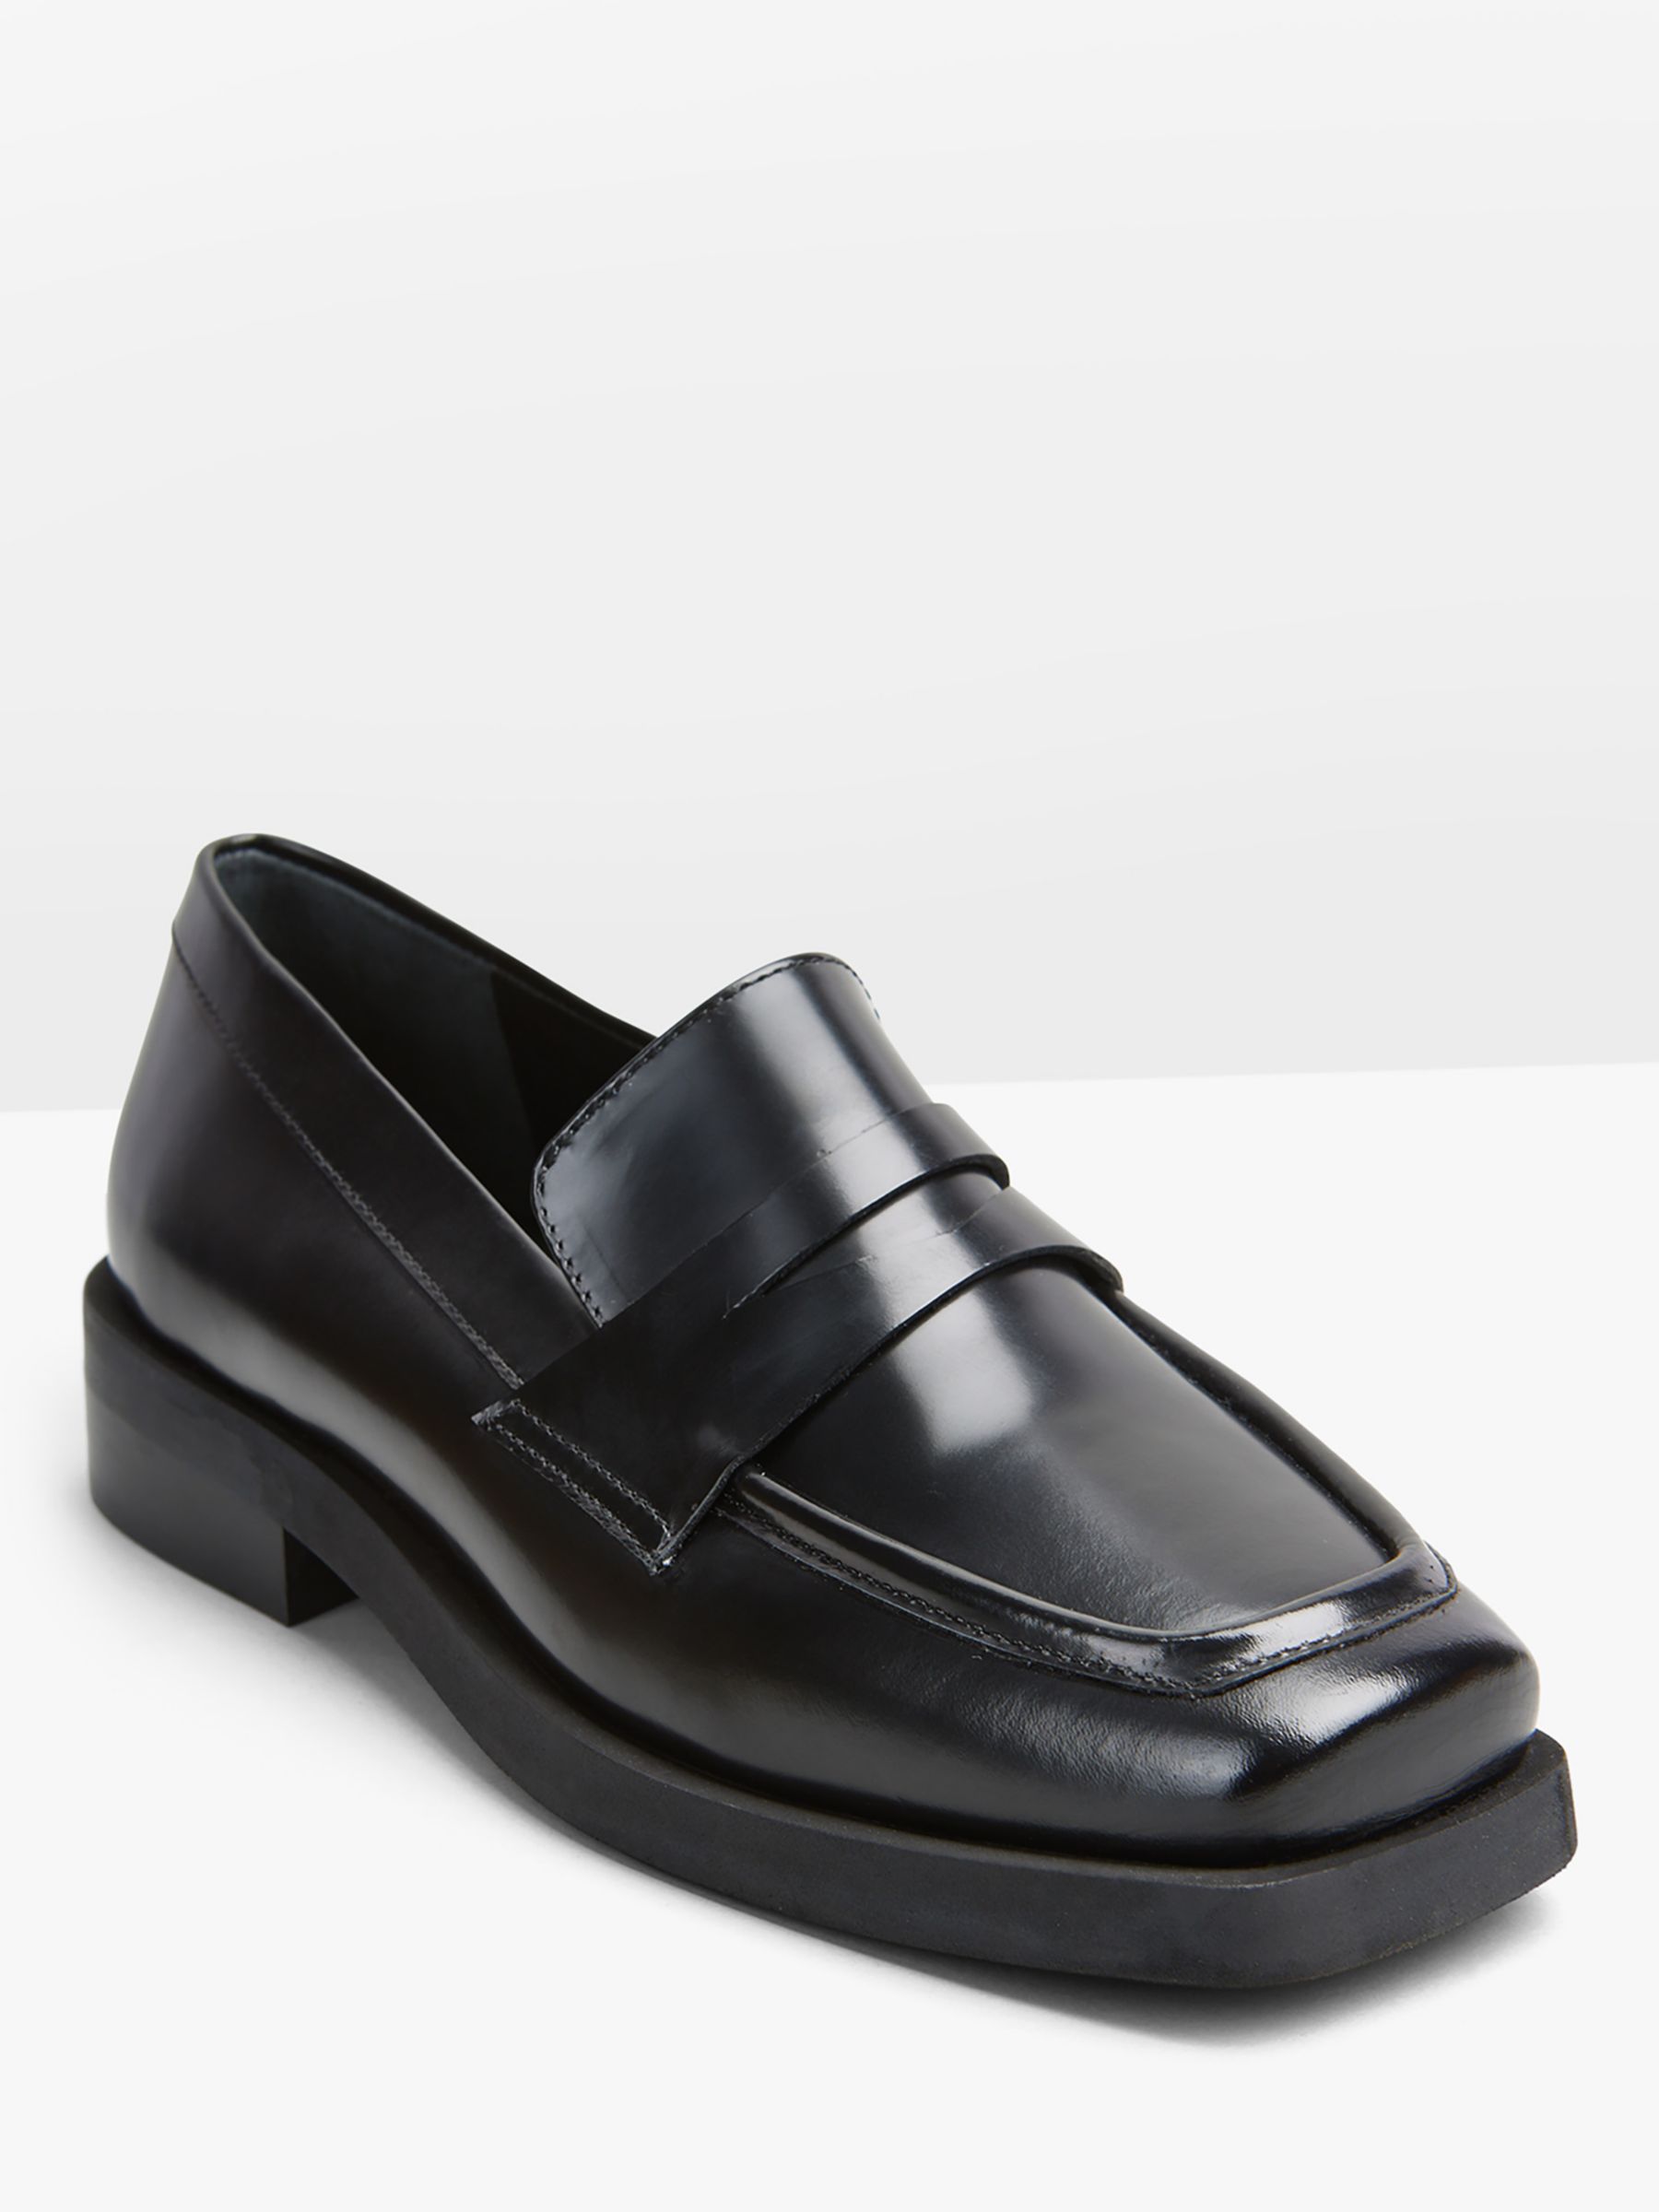 HUSH Neesha Square Toe Leather Loafers, Black, 8